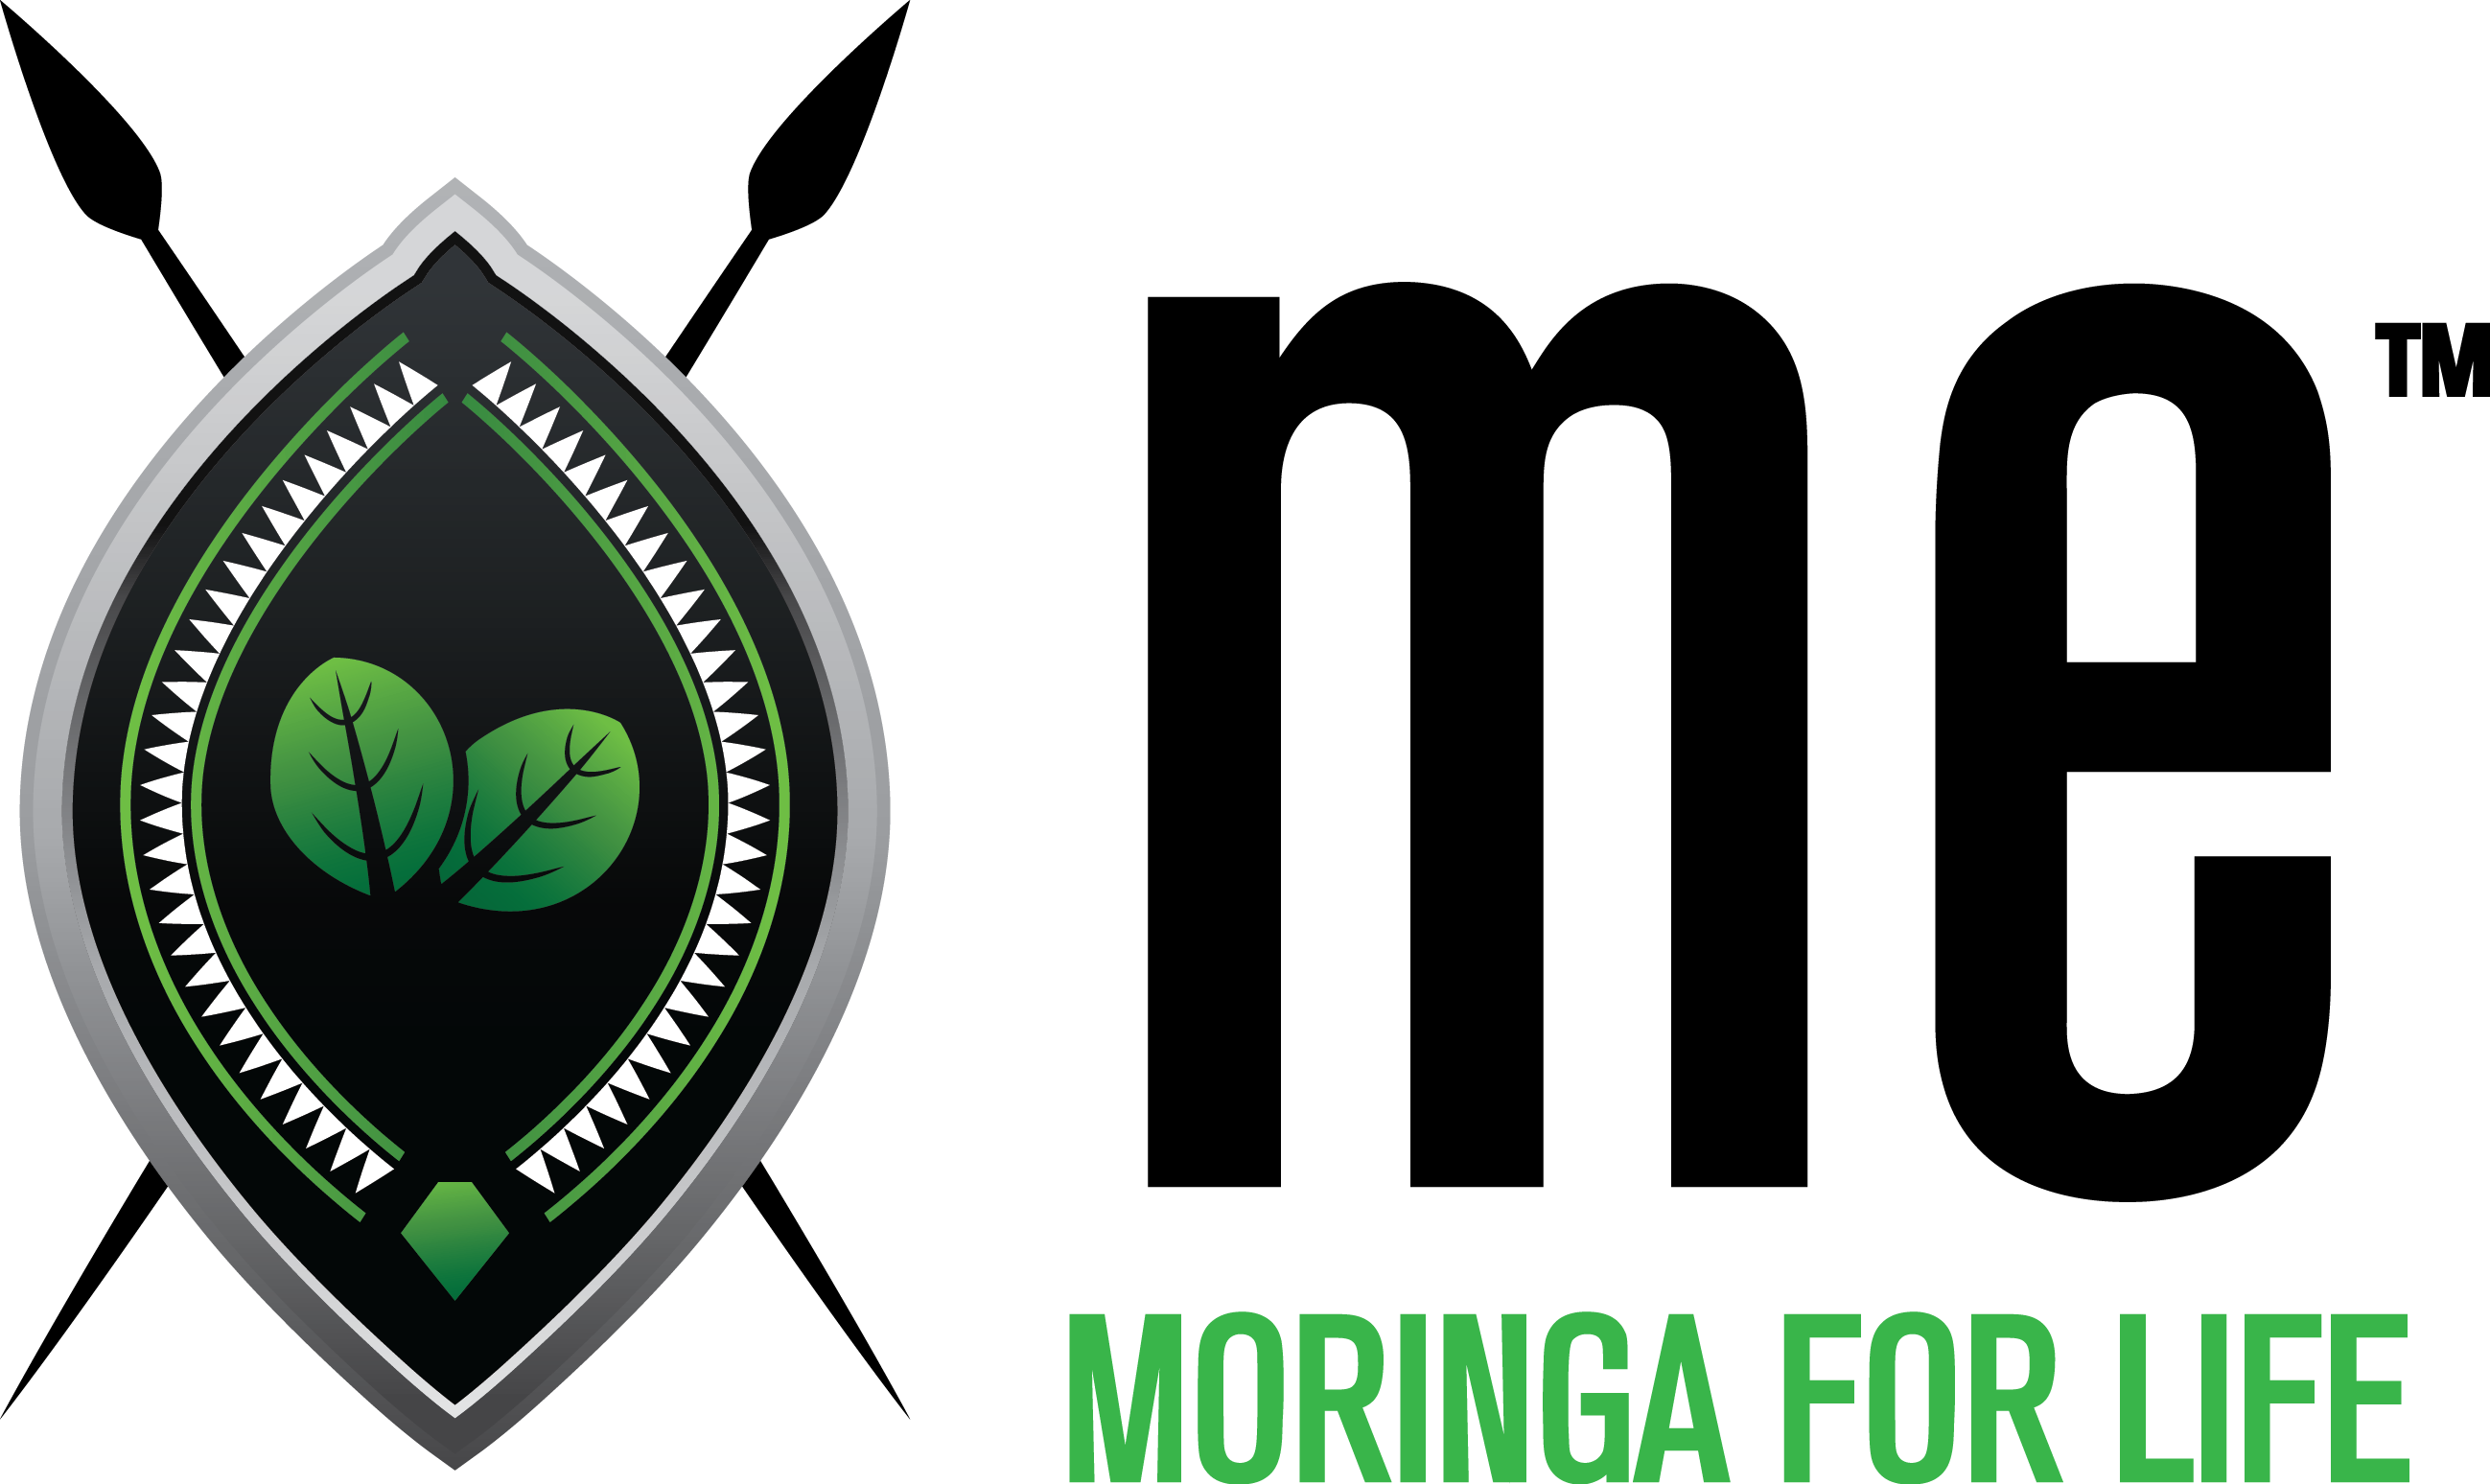 Moringa Me Blog: The products, uses and benefits